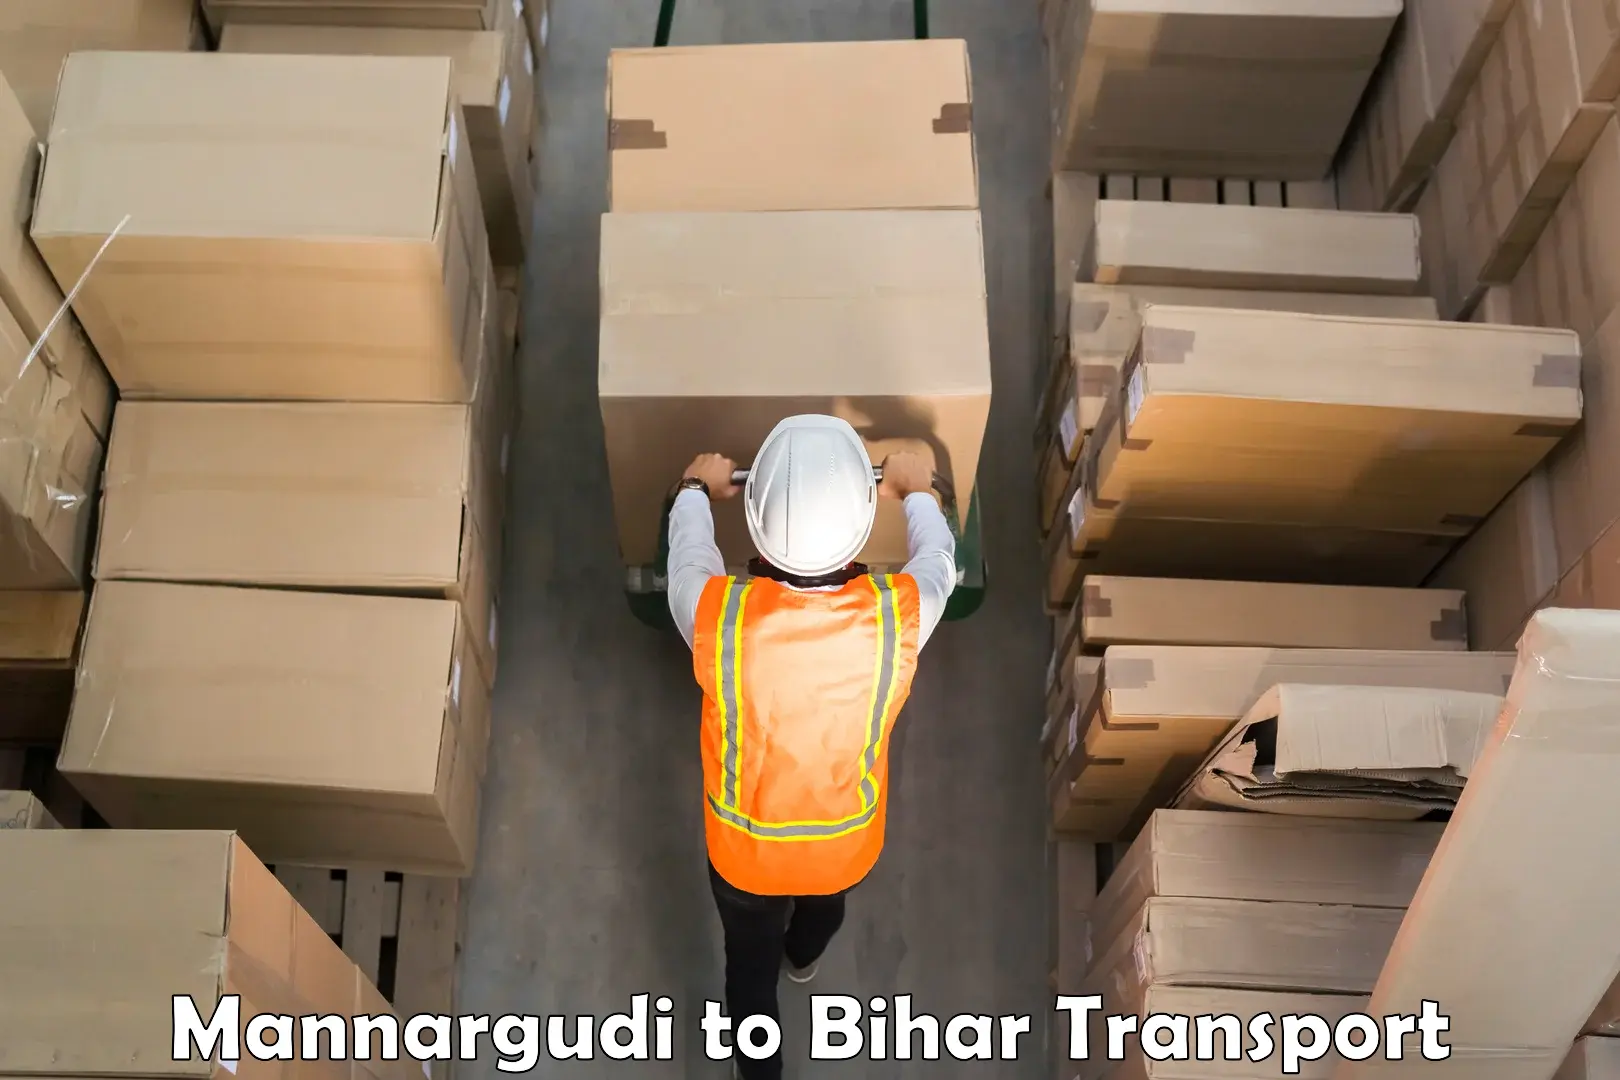 Shipping partner Mannargudi to Minapur